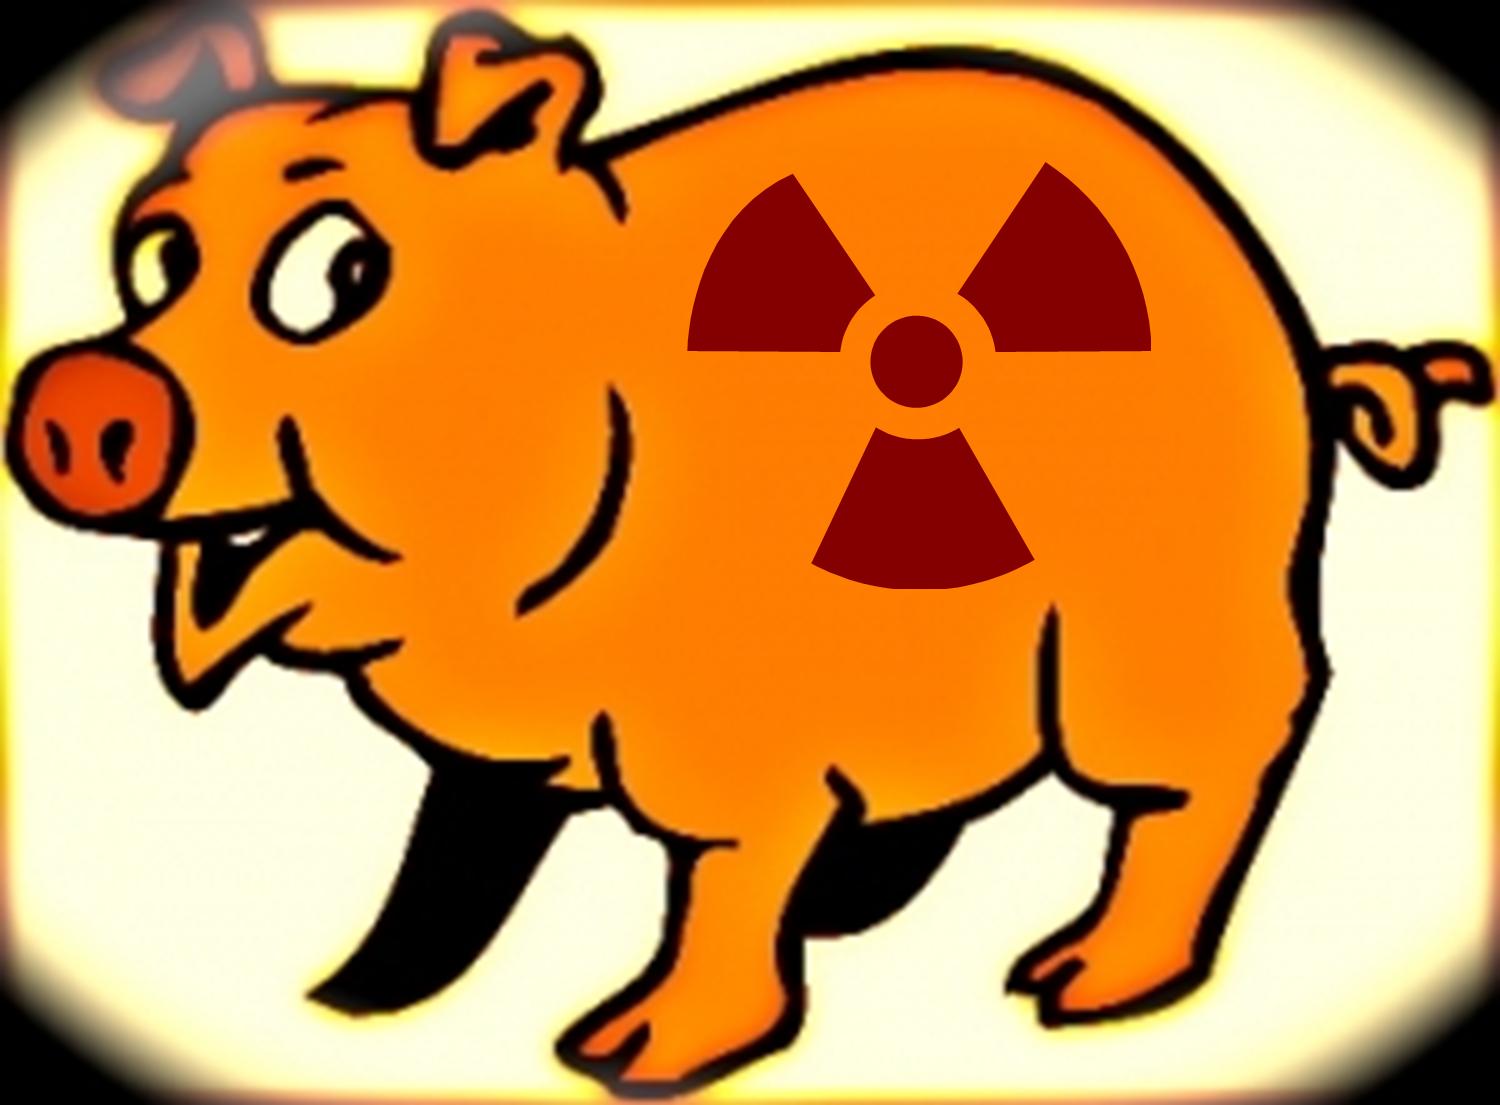 nuclear-pig-v2